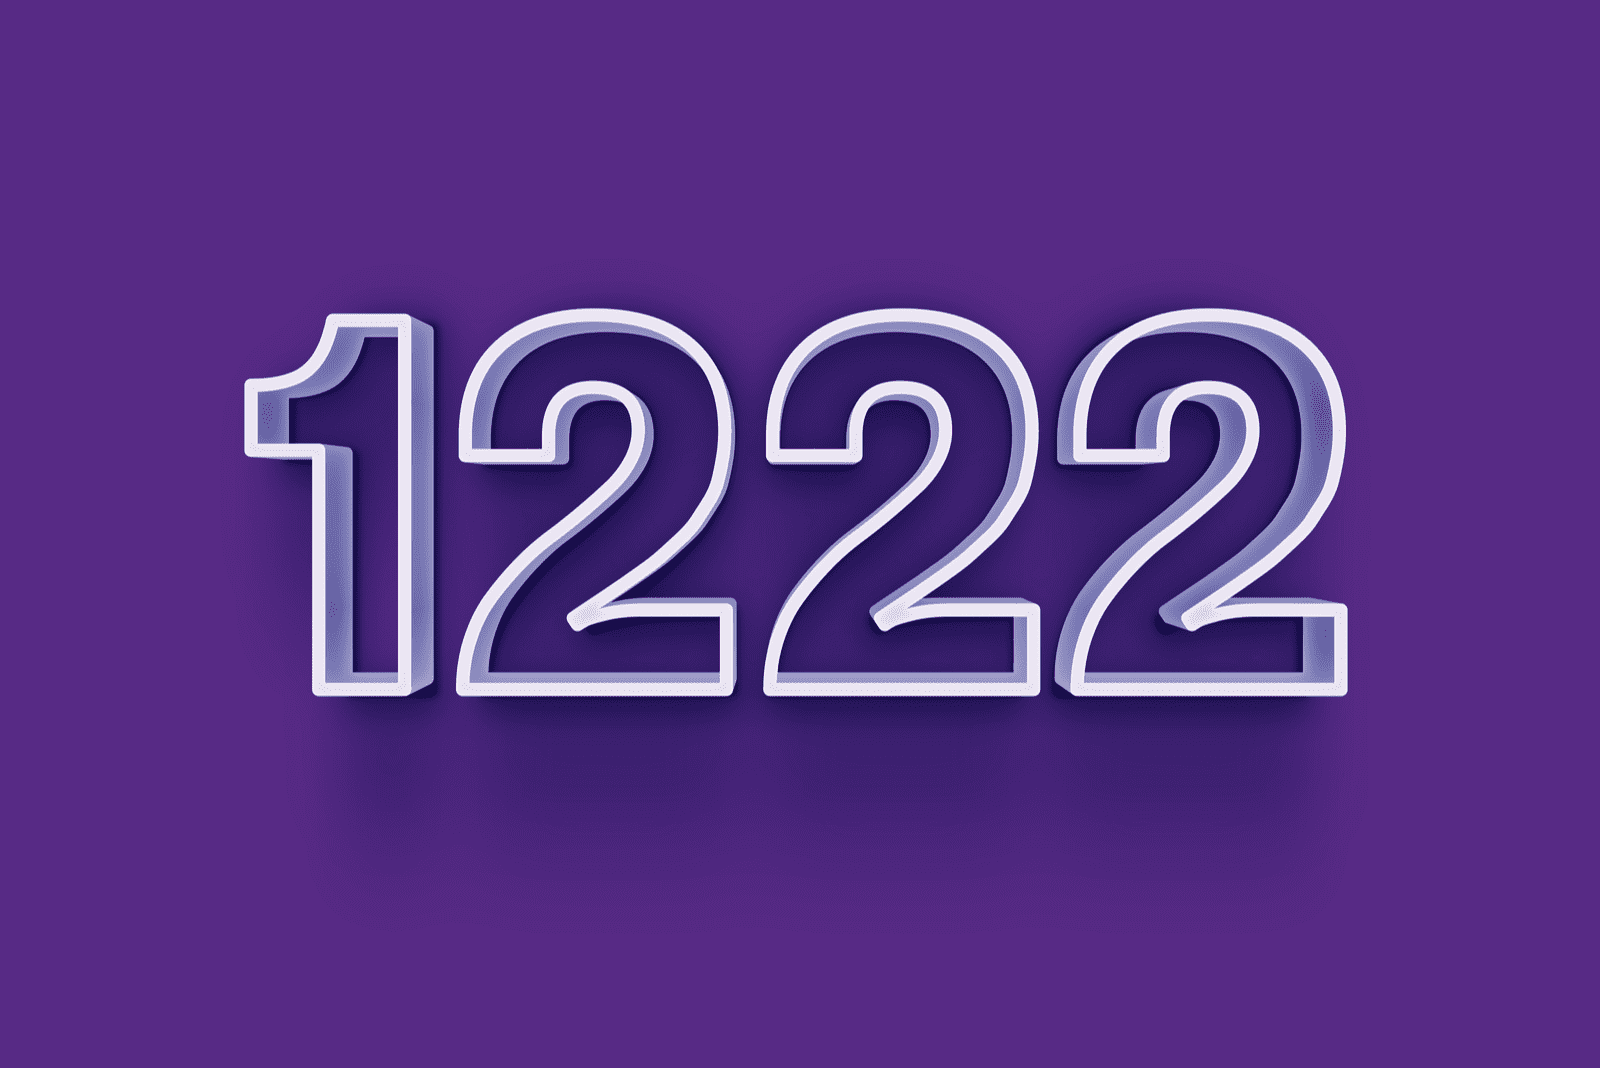 numero 1222 su sfondo viola